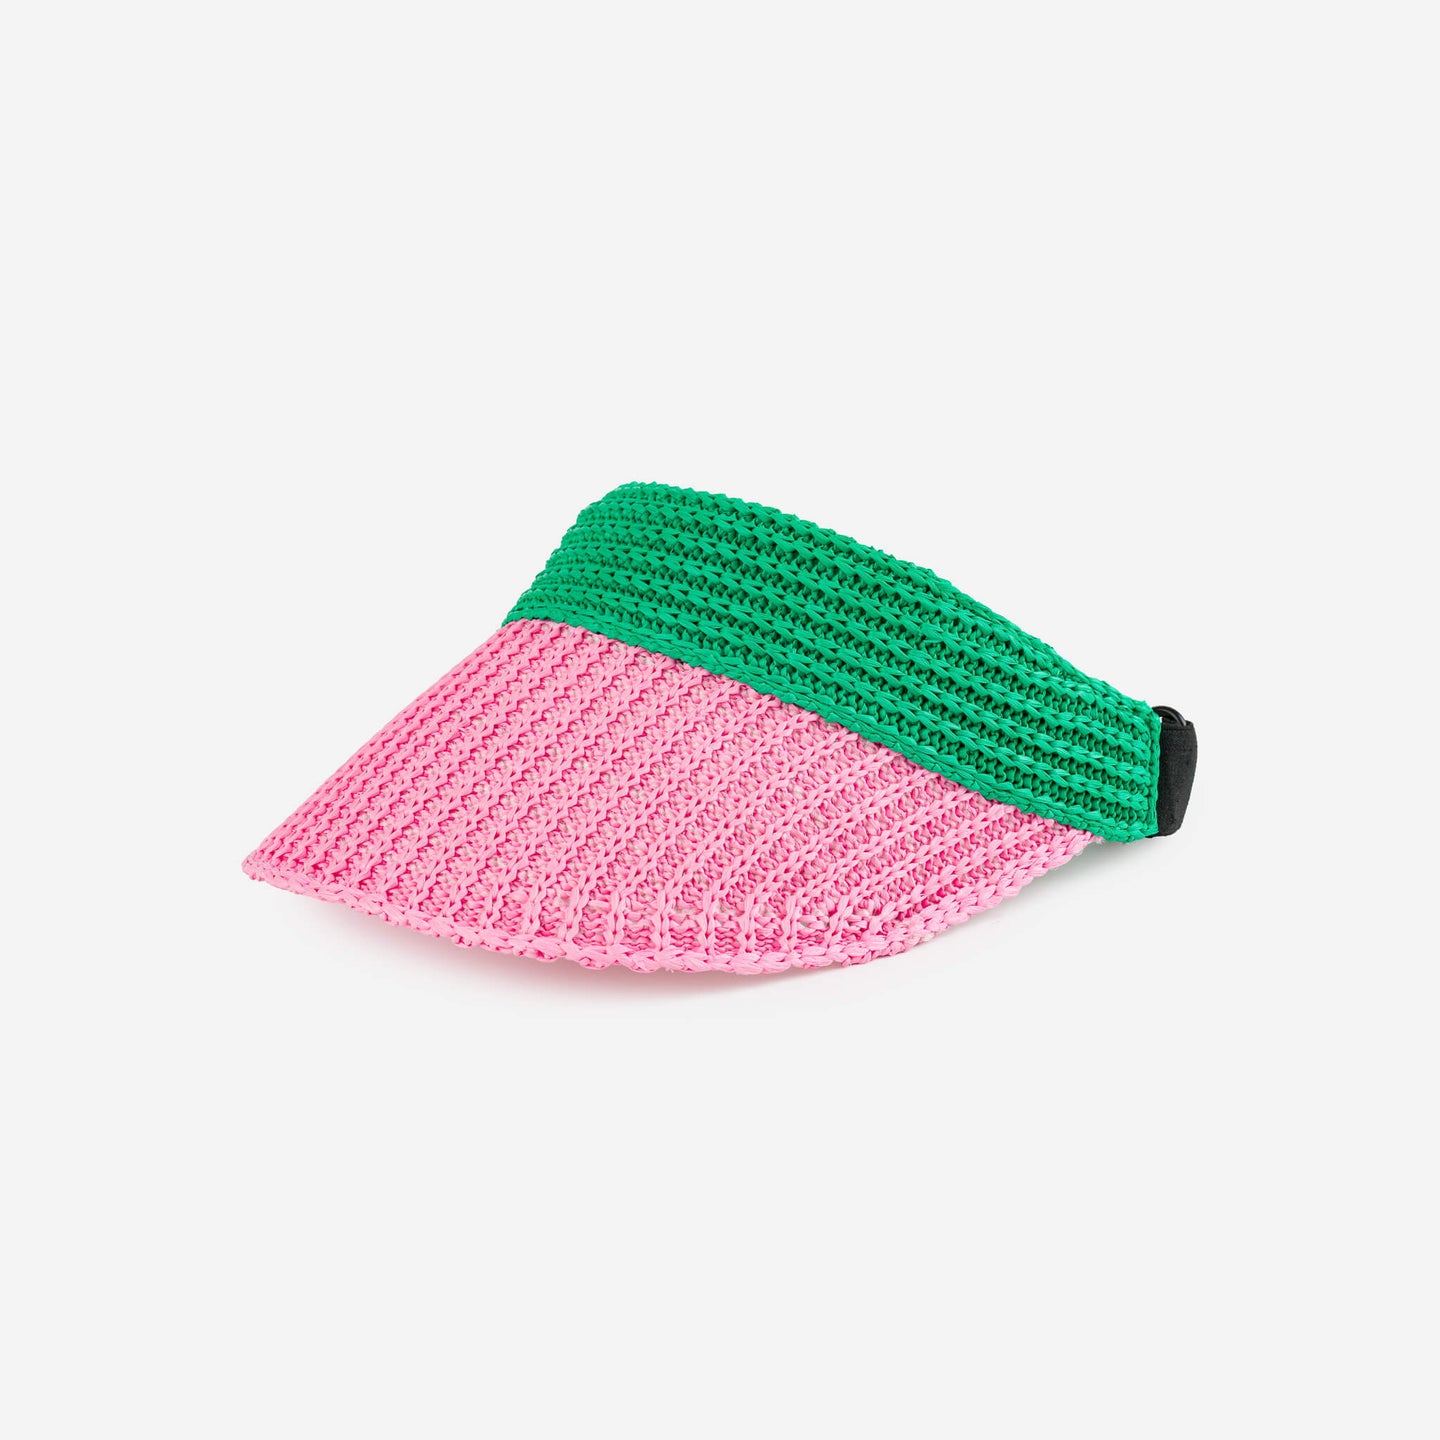 Raffia Visor Sporty Colorful Small Hat Blocks Sun Adjustable Strap